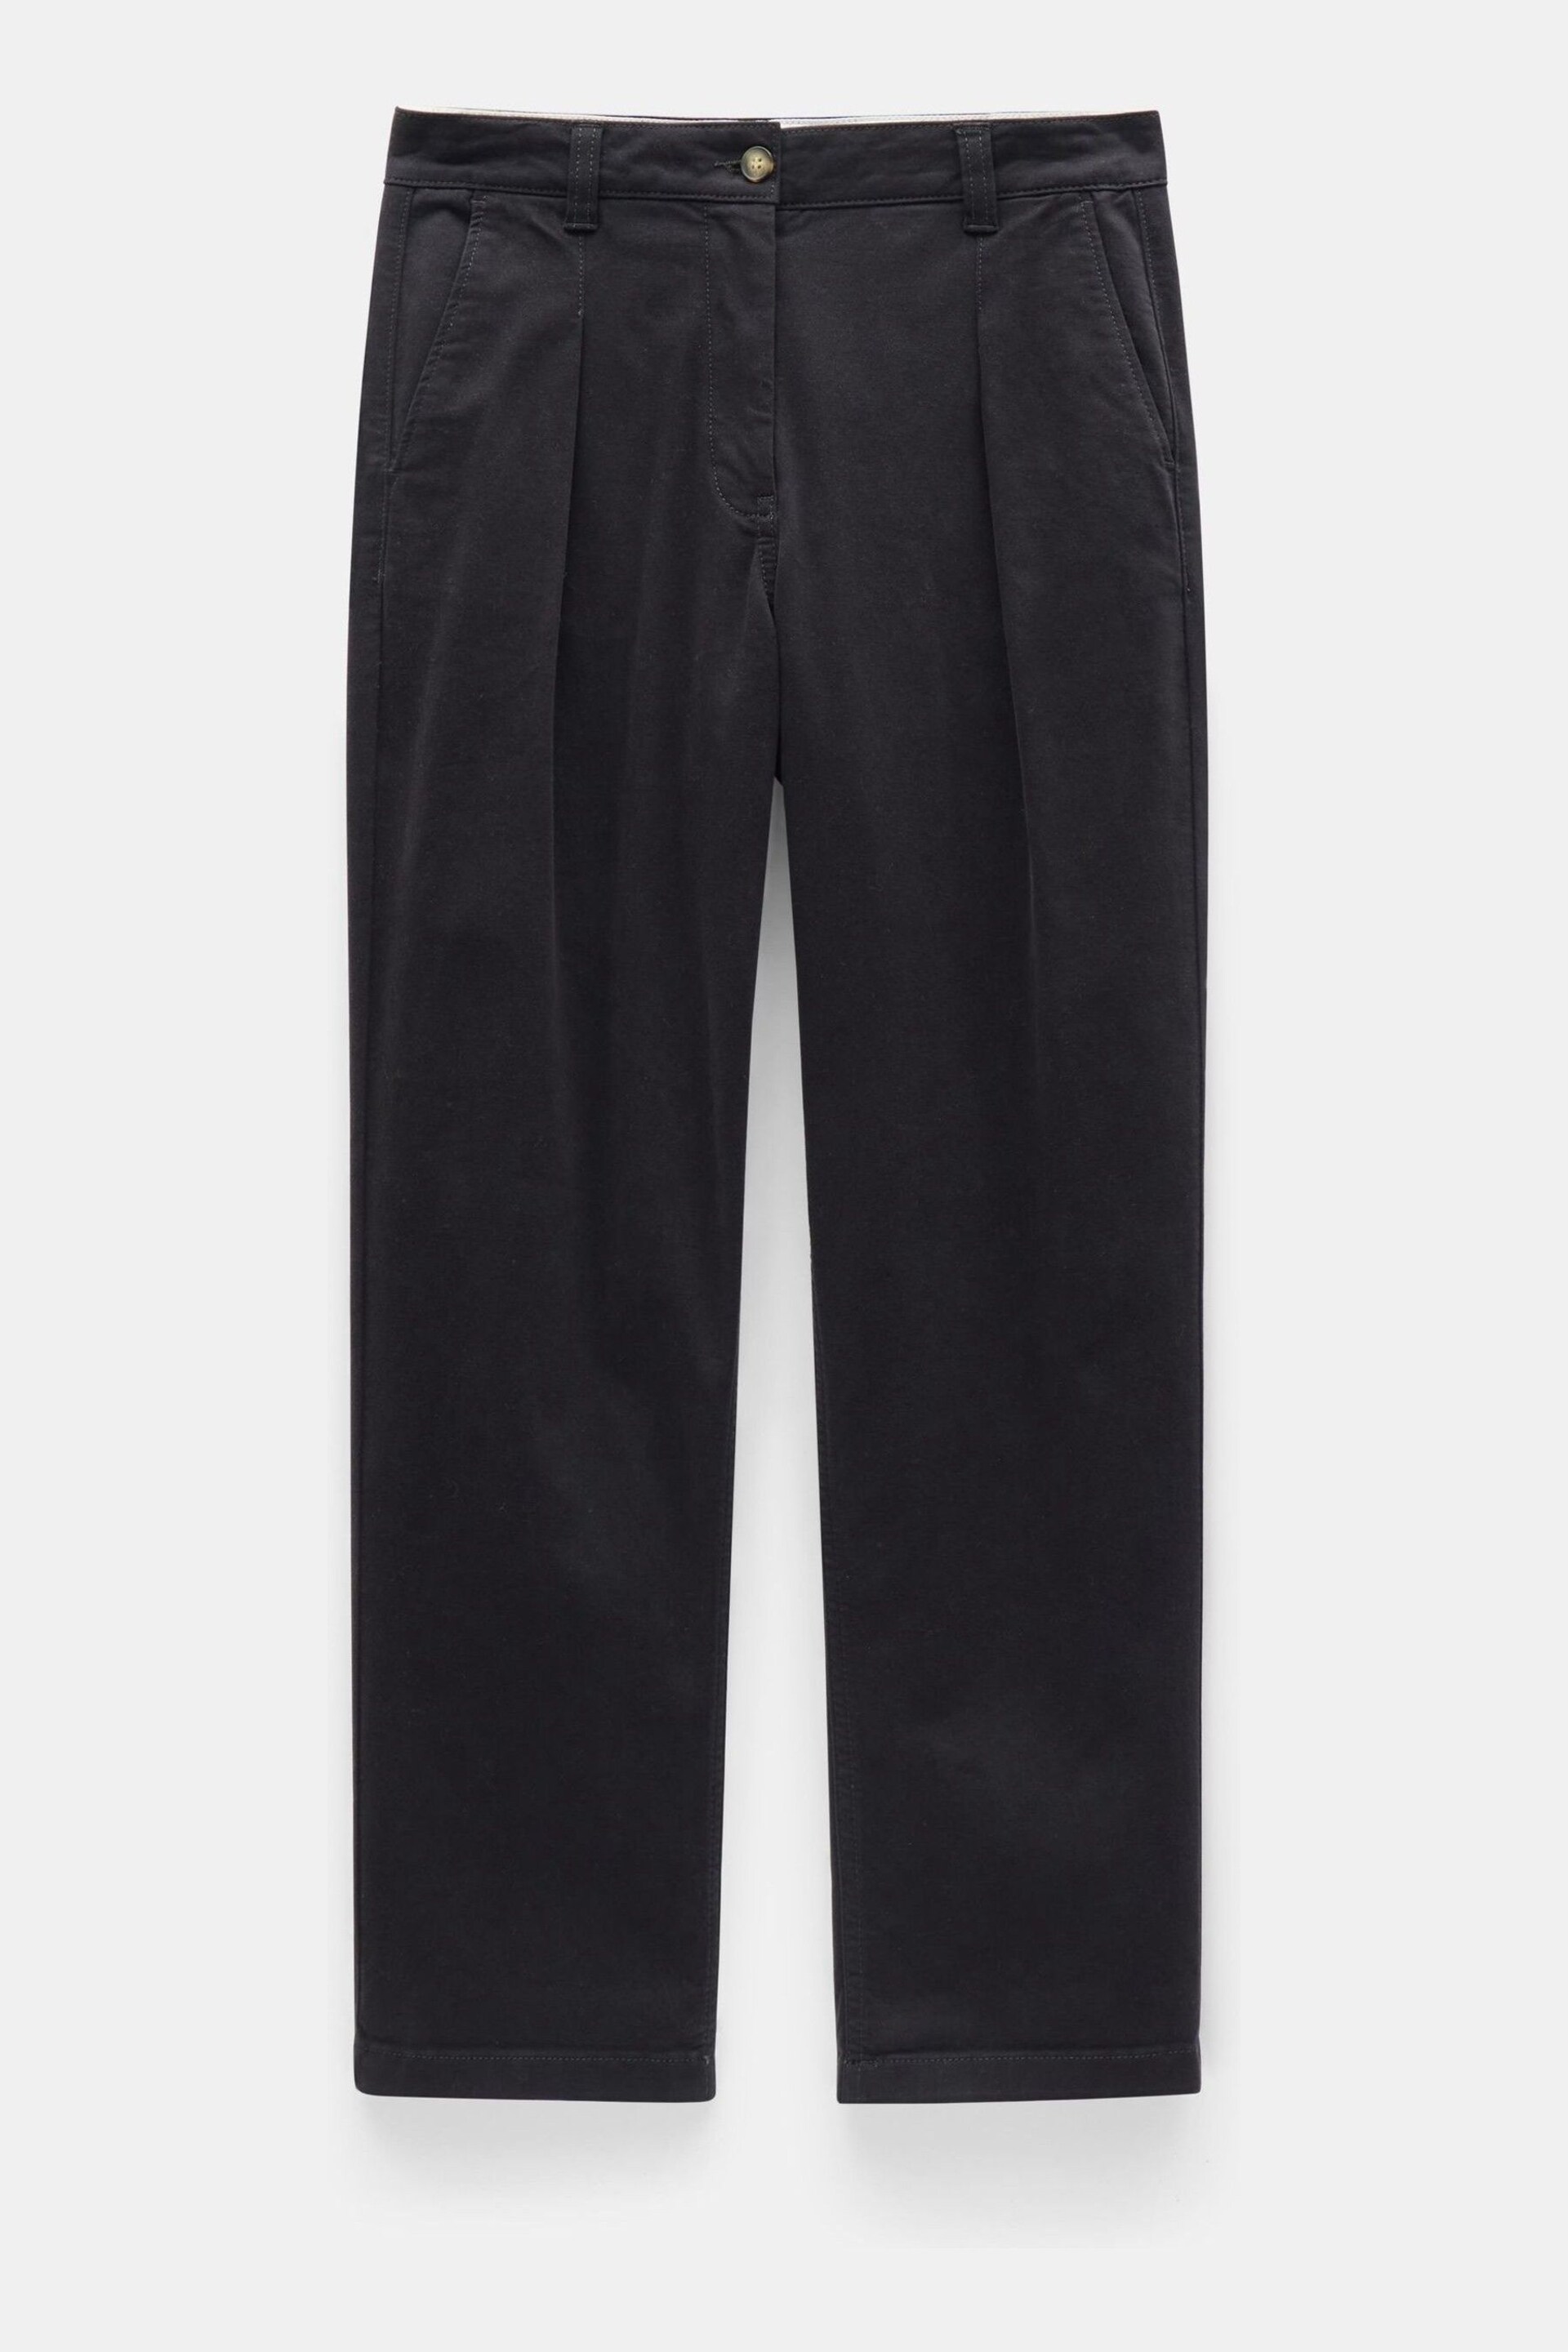 Hush Black Imogen Cotton Trousers - Image 4 of 4